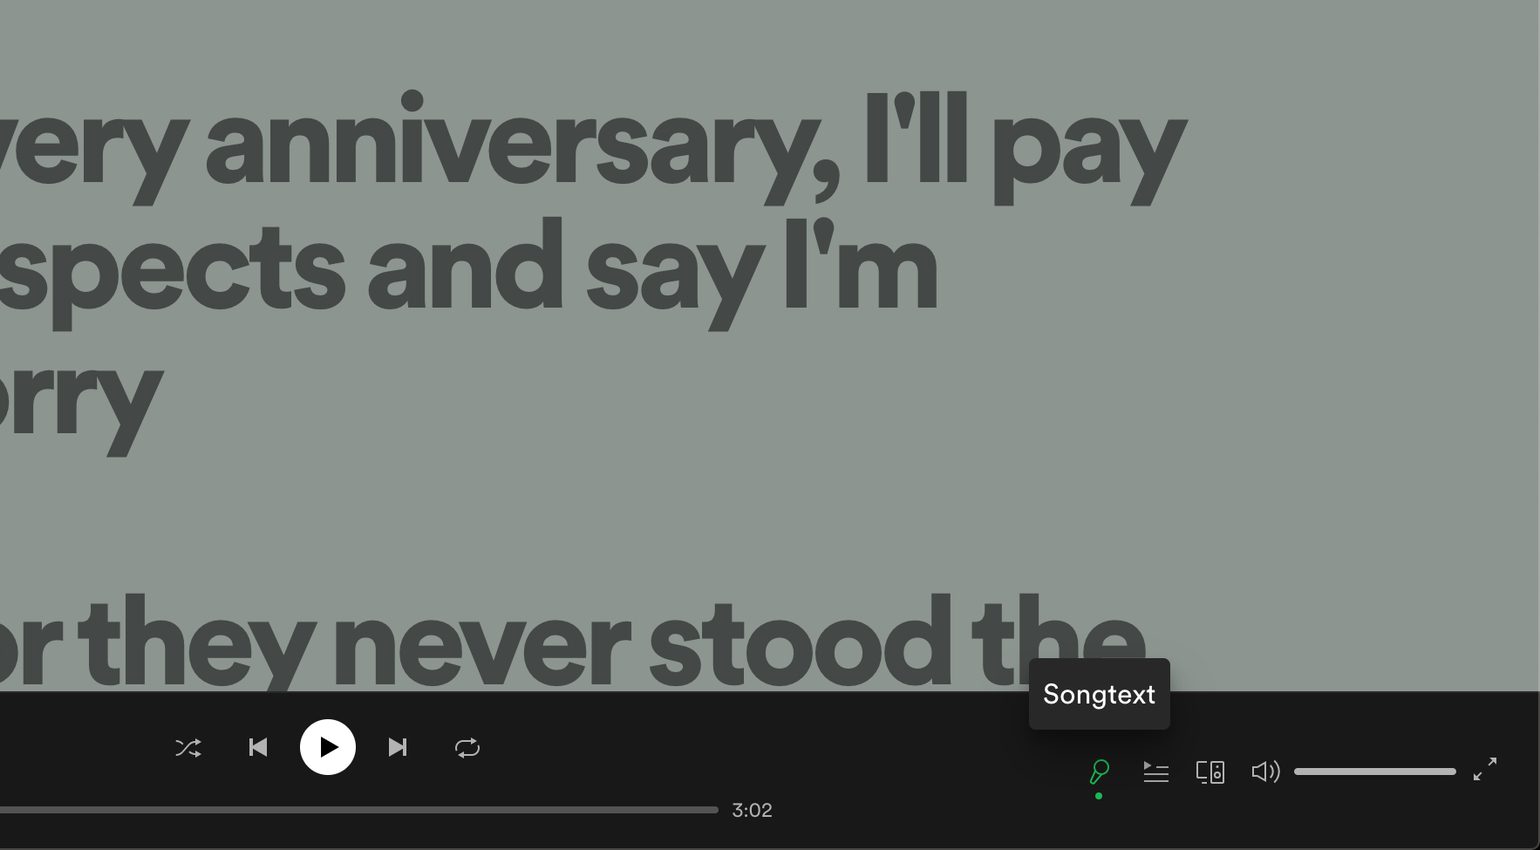 Leak: Kommt mit Spotify Sing Along ein automatischer Karaoke-Modus?